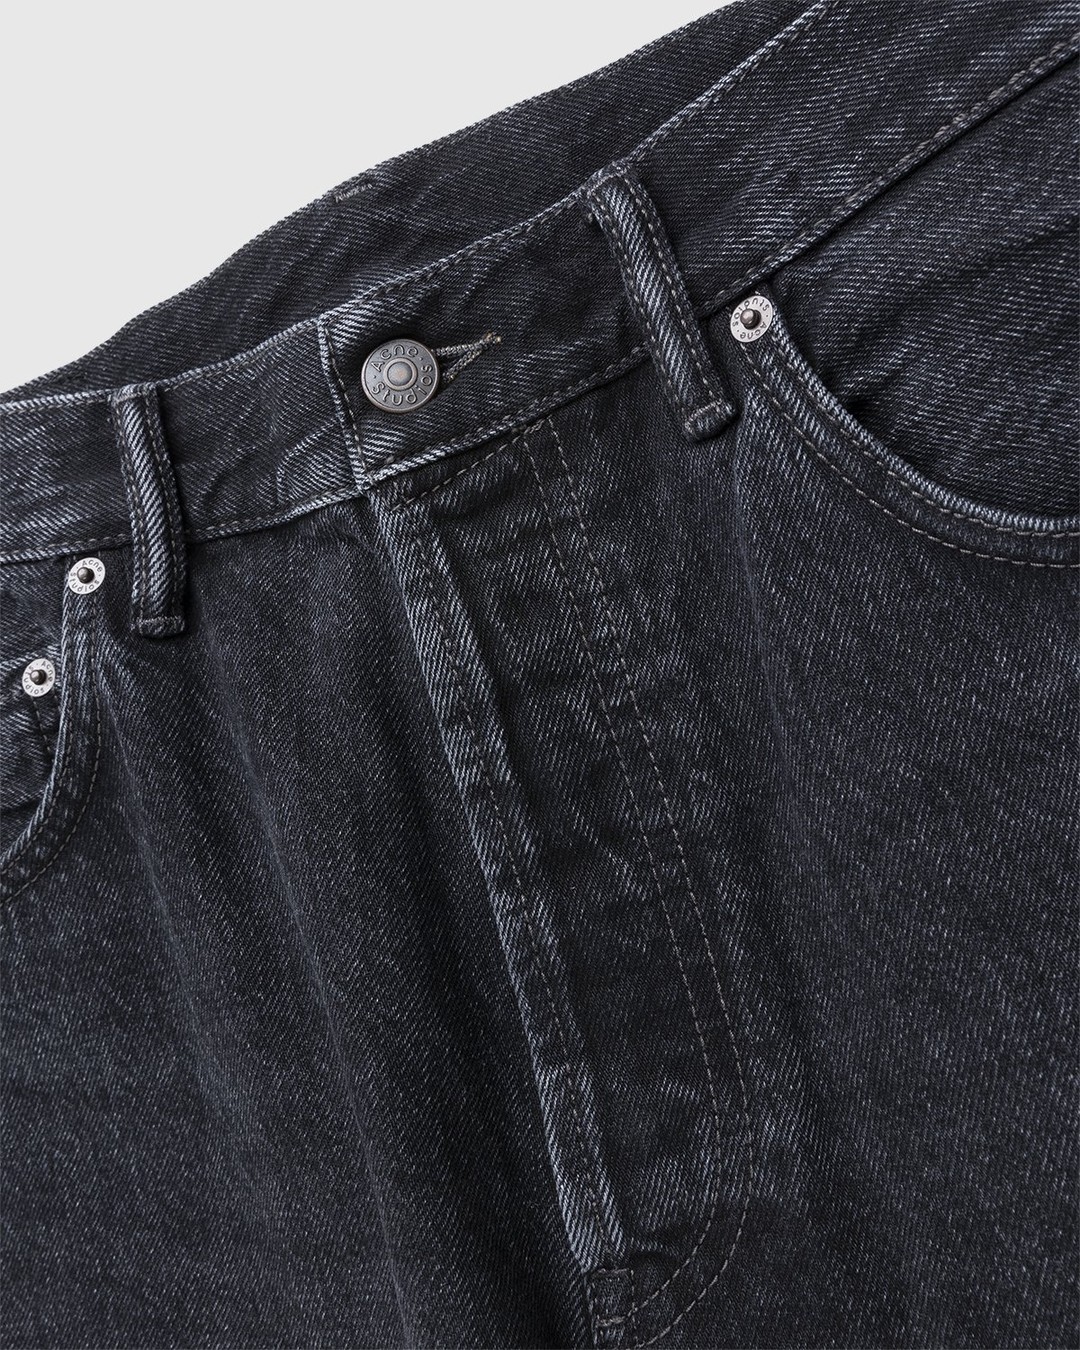 Acne Studios – Brutus 2021M Boot Cut Jeans Black - Pants - Black - Image 4